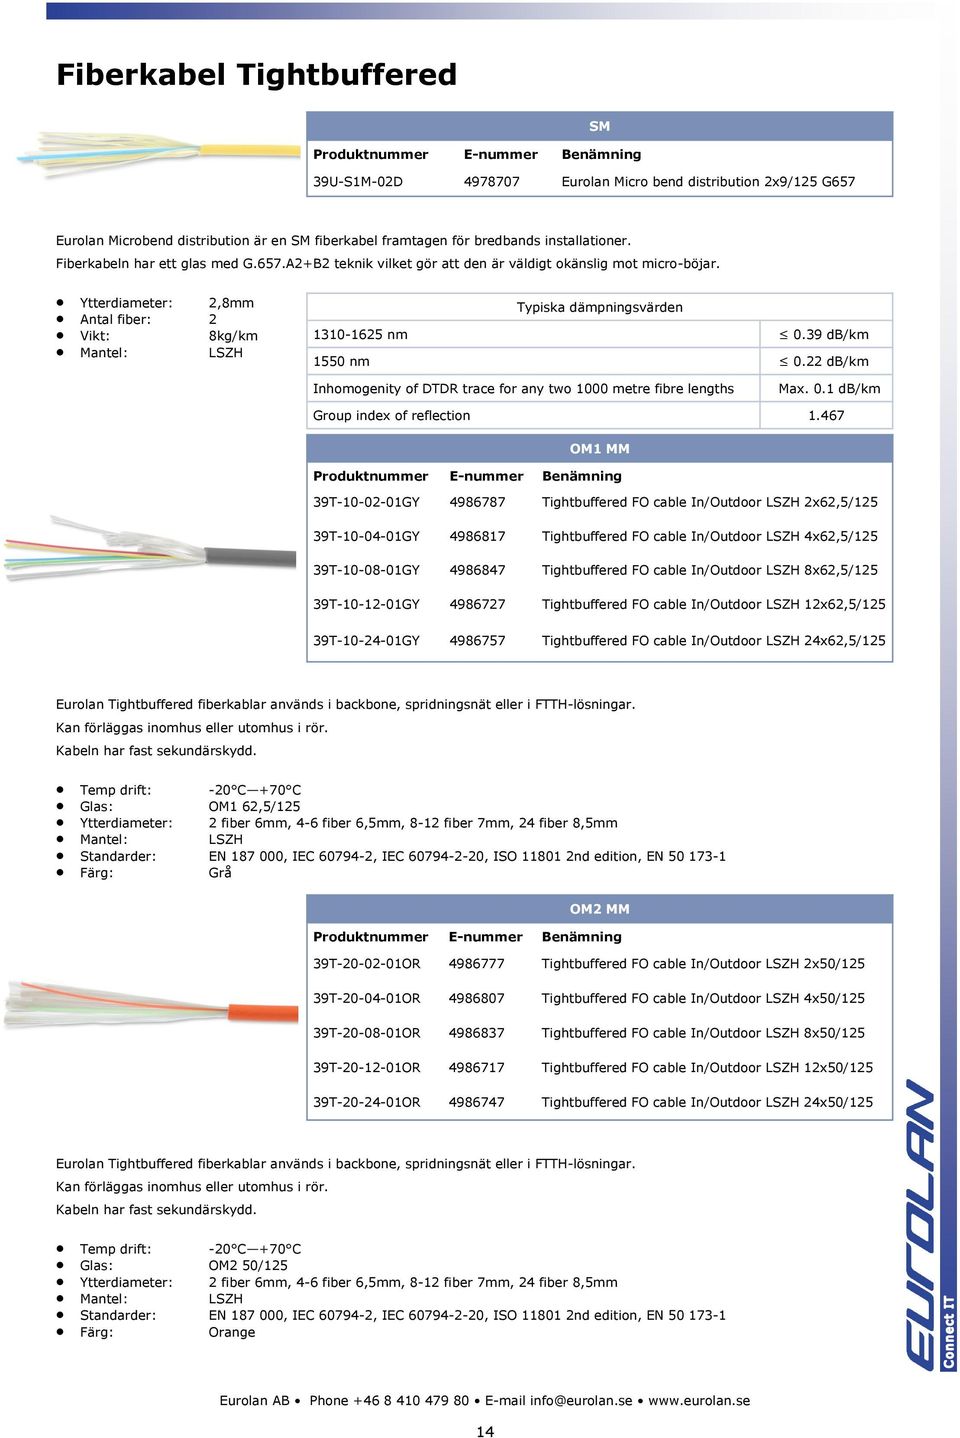 Ytterdiameter: 2,8mm Antal fiber: 2 Vikt: 8kg/km Mantel: LSZH Typiska dämpningsvärden 1310-1625 nm 0.39 db/km 1550 nm 0.22 db/km Inhomogenity of DTDR trace for any two 1000 metre fibre lengths Max. 0.1 db/km Group index of reflection 1.